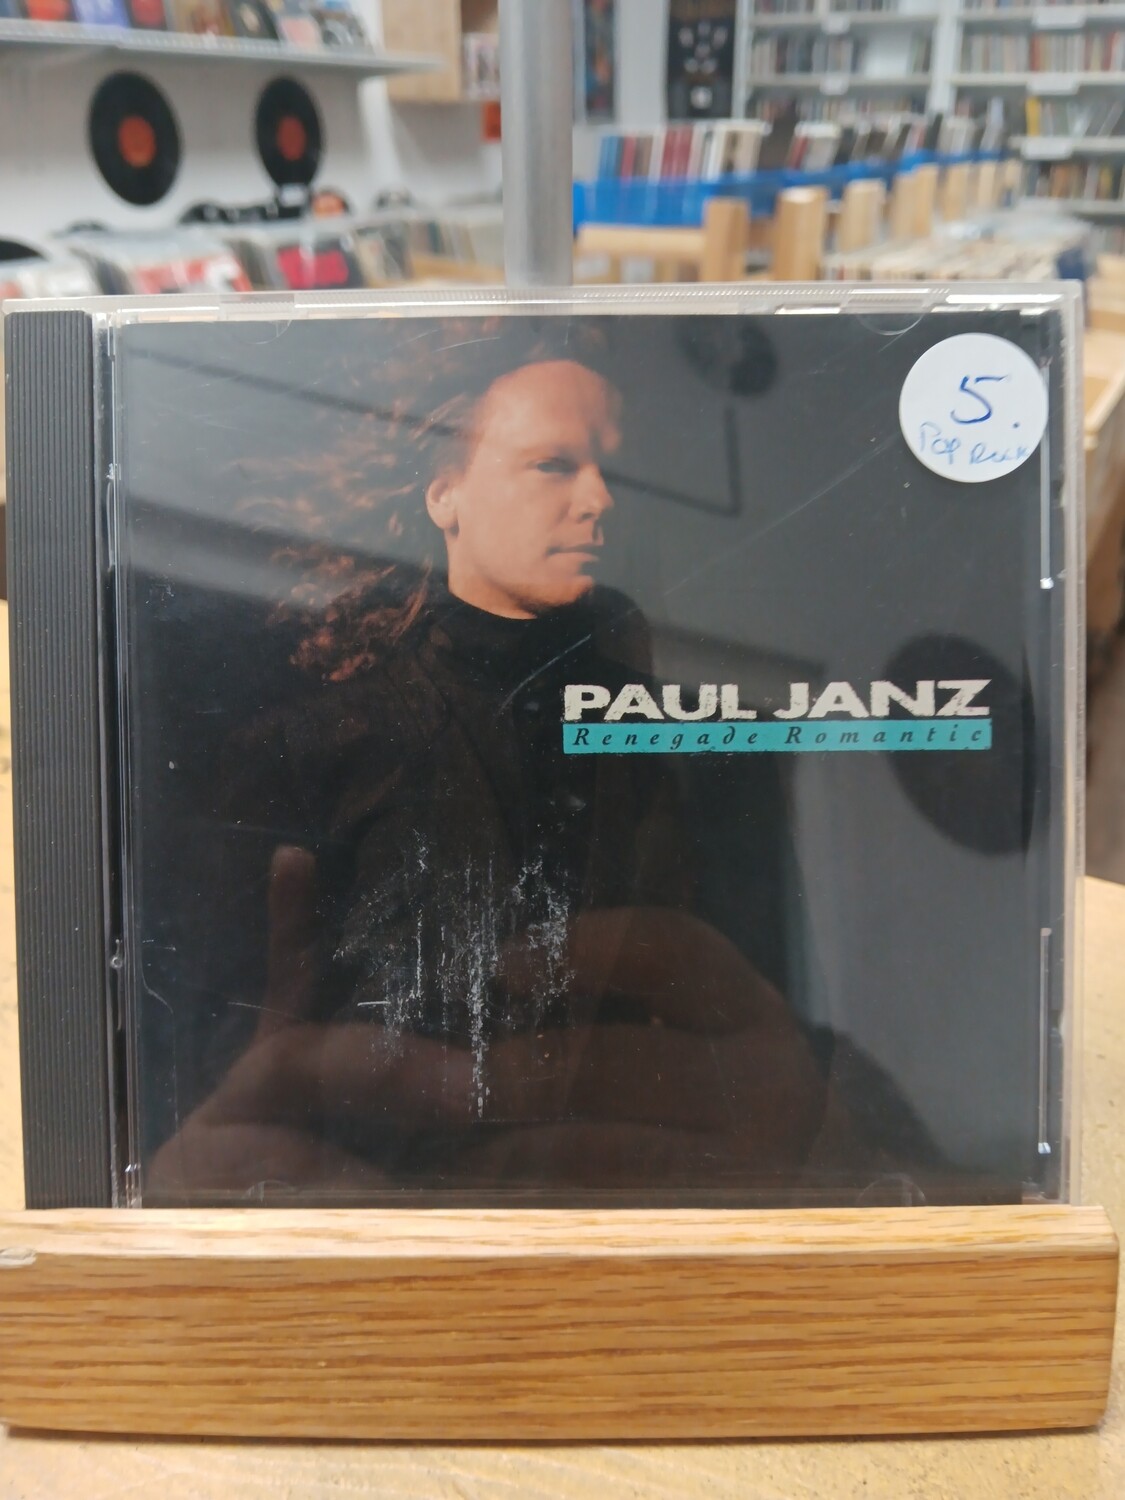 PAUL JANZ - Renegade Romantic (CD)